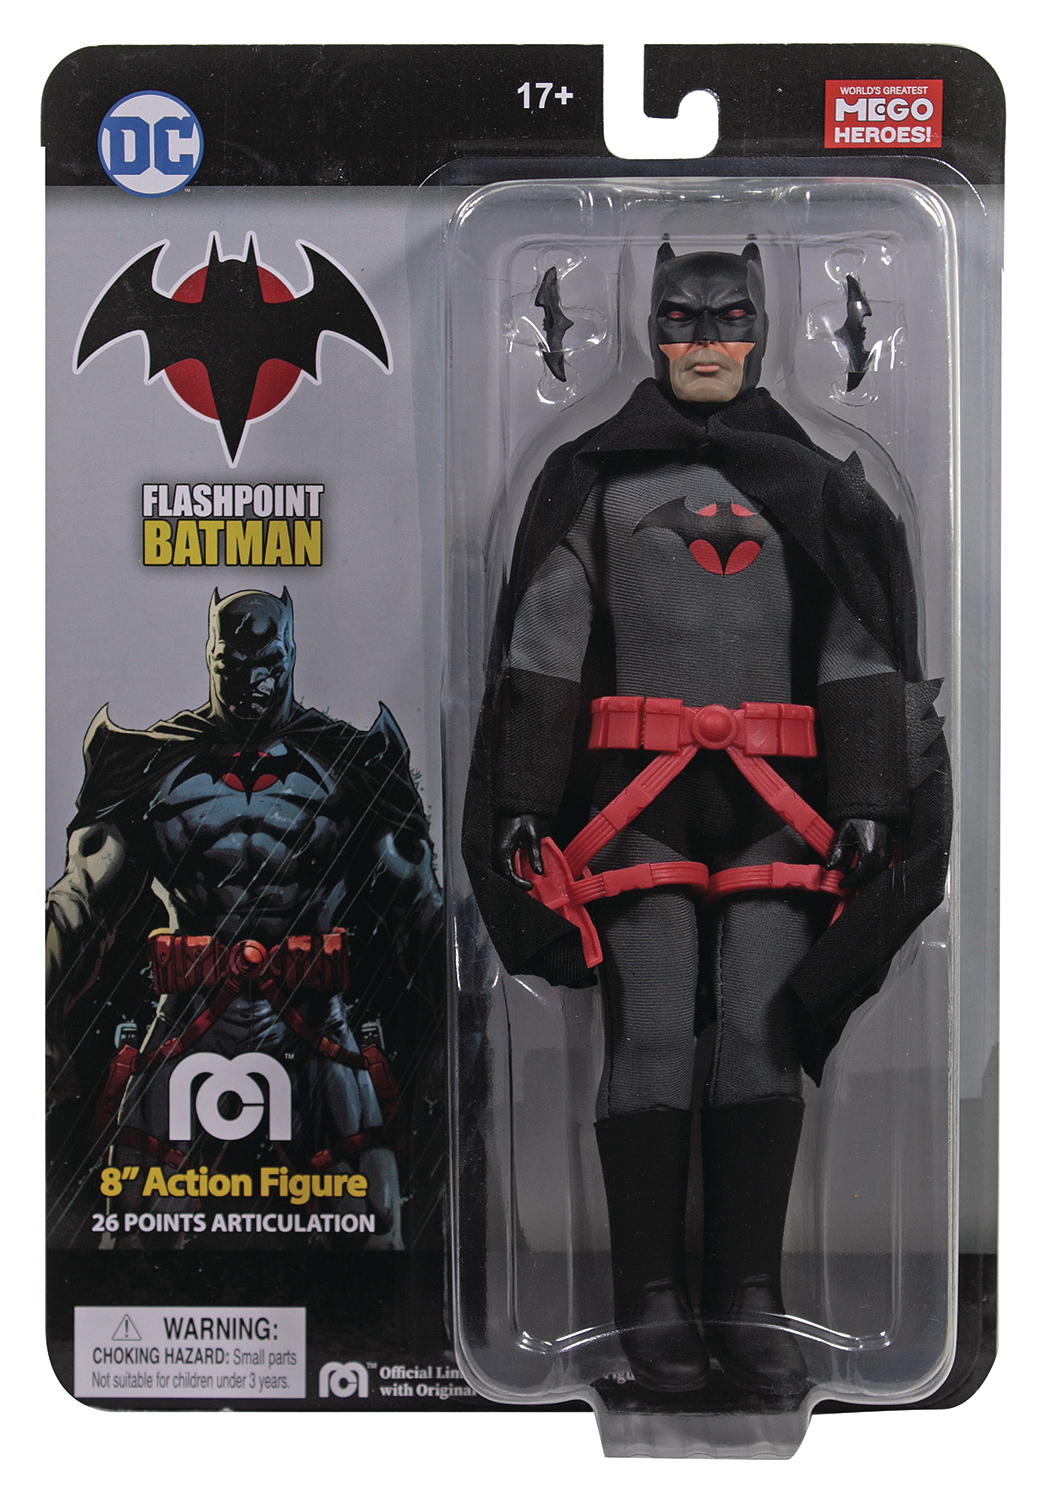 Mego DC Heroes Flashpoint Batman 8-inch Action Figure 